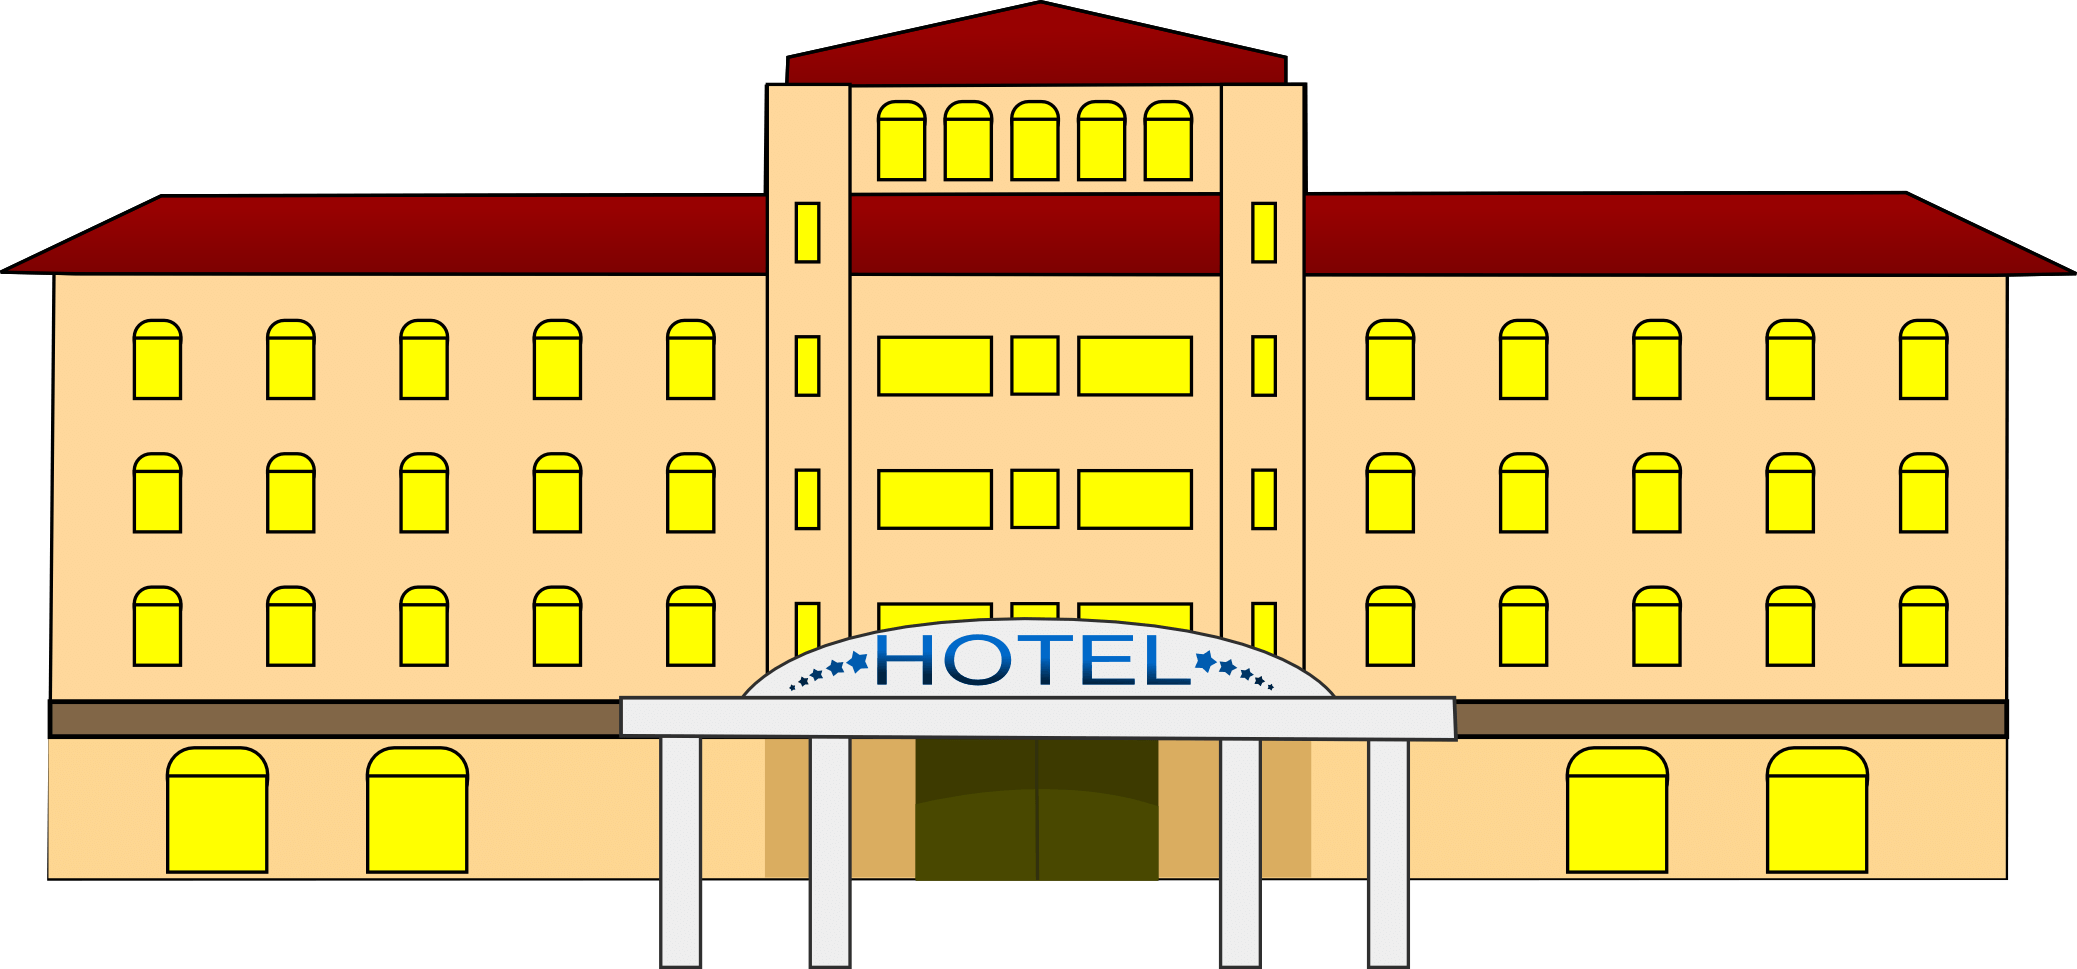 Hotel clipart hotel staff, Hotel hotel staff Transparent.